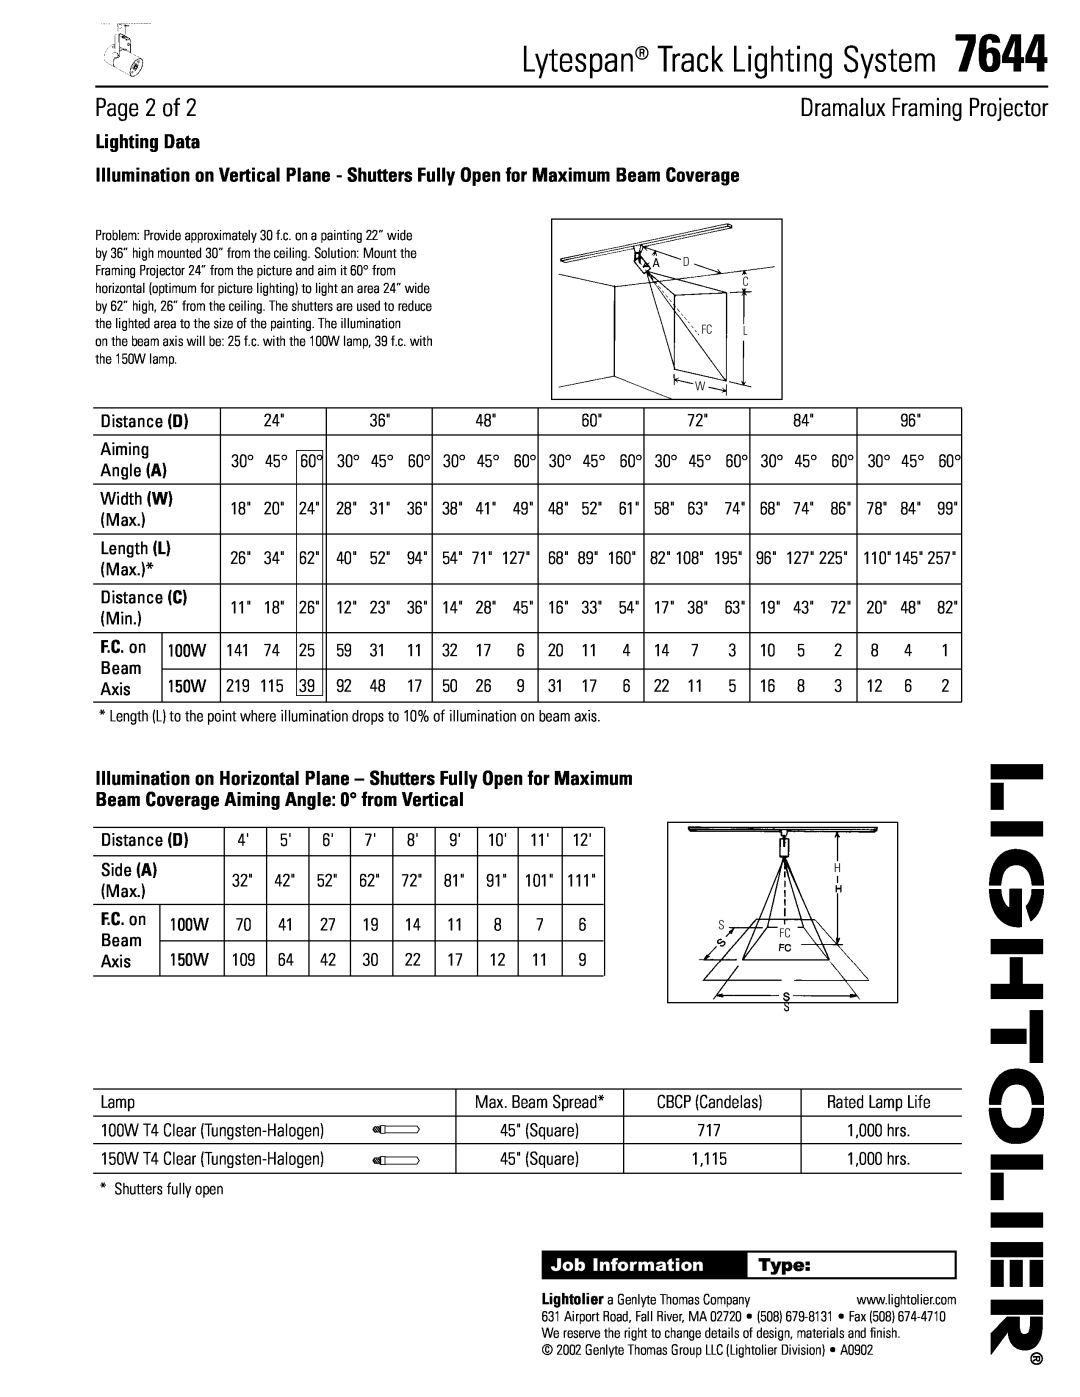 Lightolier 7644 manual Page 2 of, Lytespan Track Lighting System 